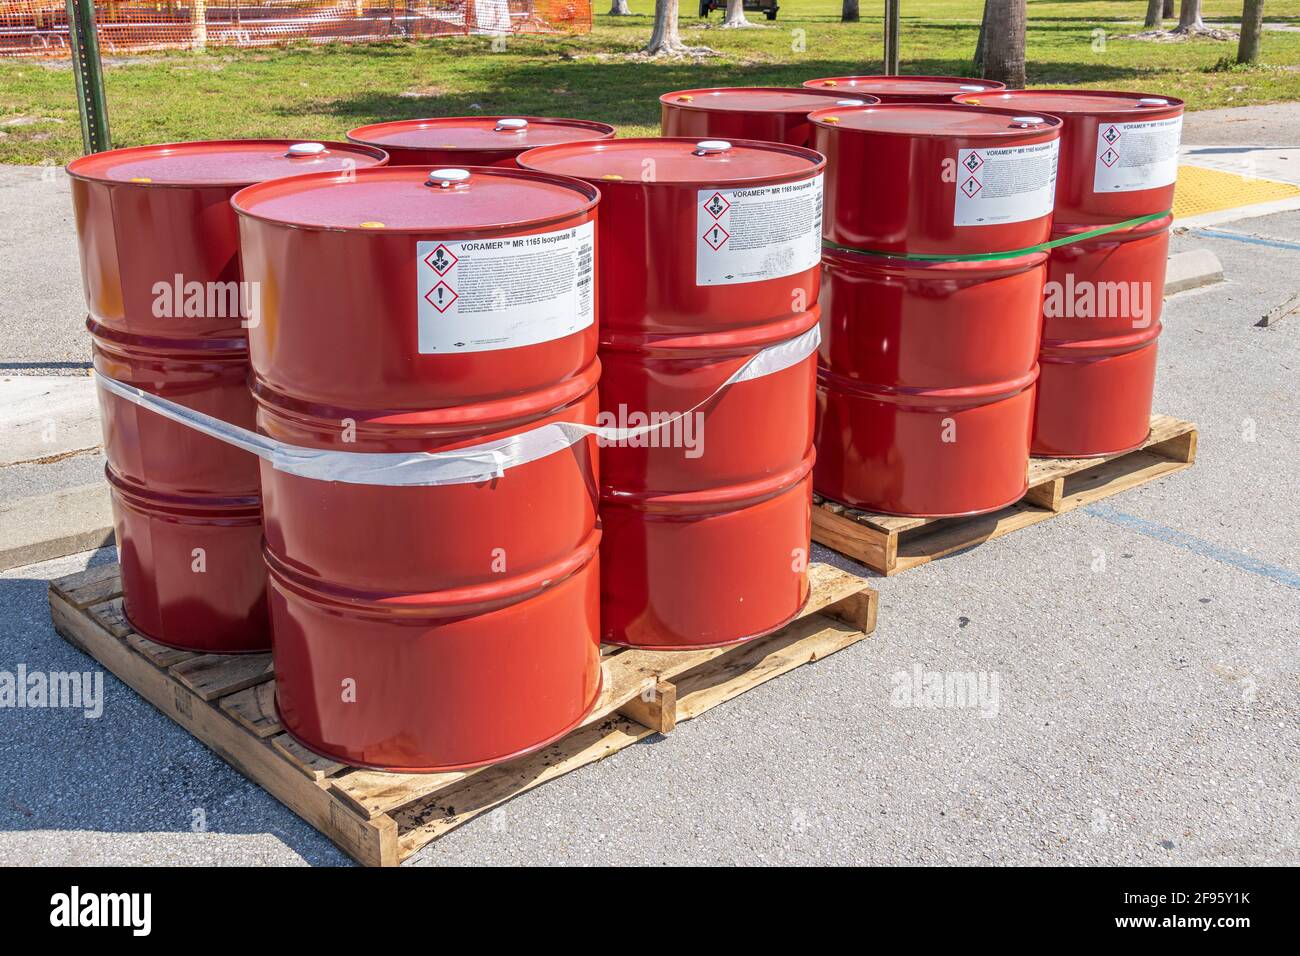 Red barrels of Voramer MR 1165 isocyanate - Vista View Park, Davie, Florida, USA Stock Photo